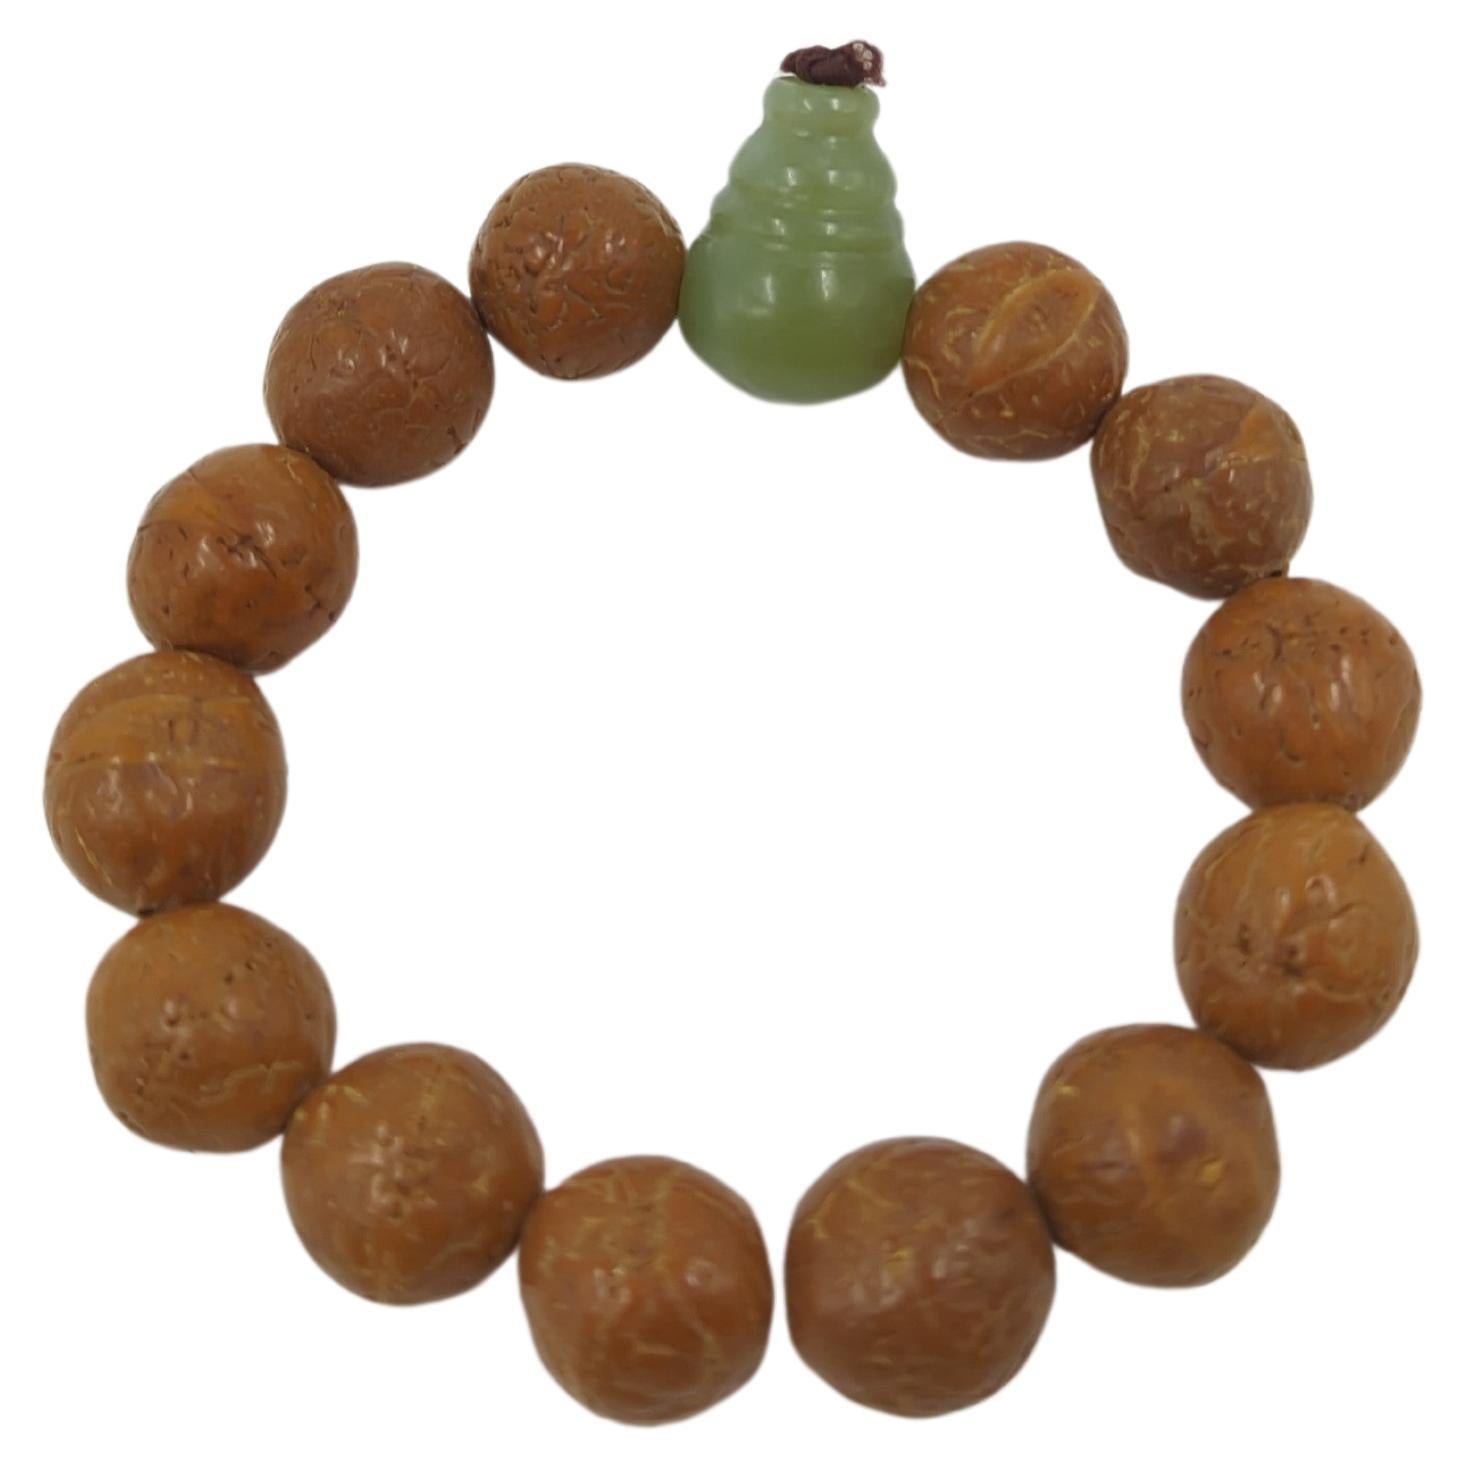 Antique Chinese Celadon Jade Hulu Bead Bodhi Seeds Bracelet - BEAUTIFUL PATINA For Sale